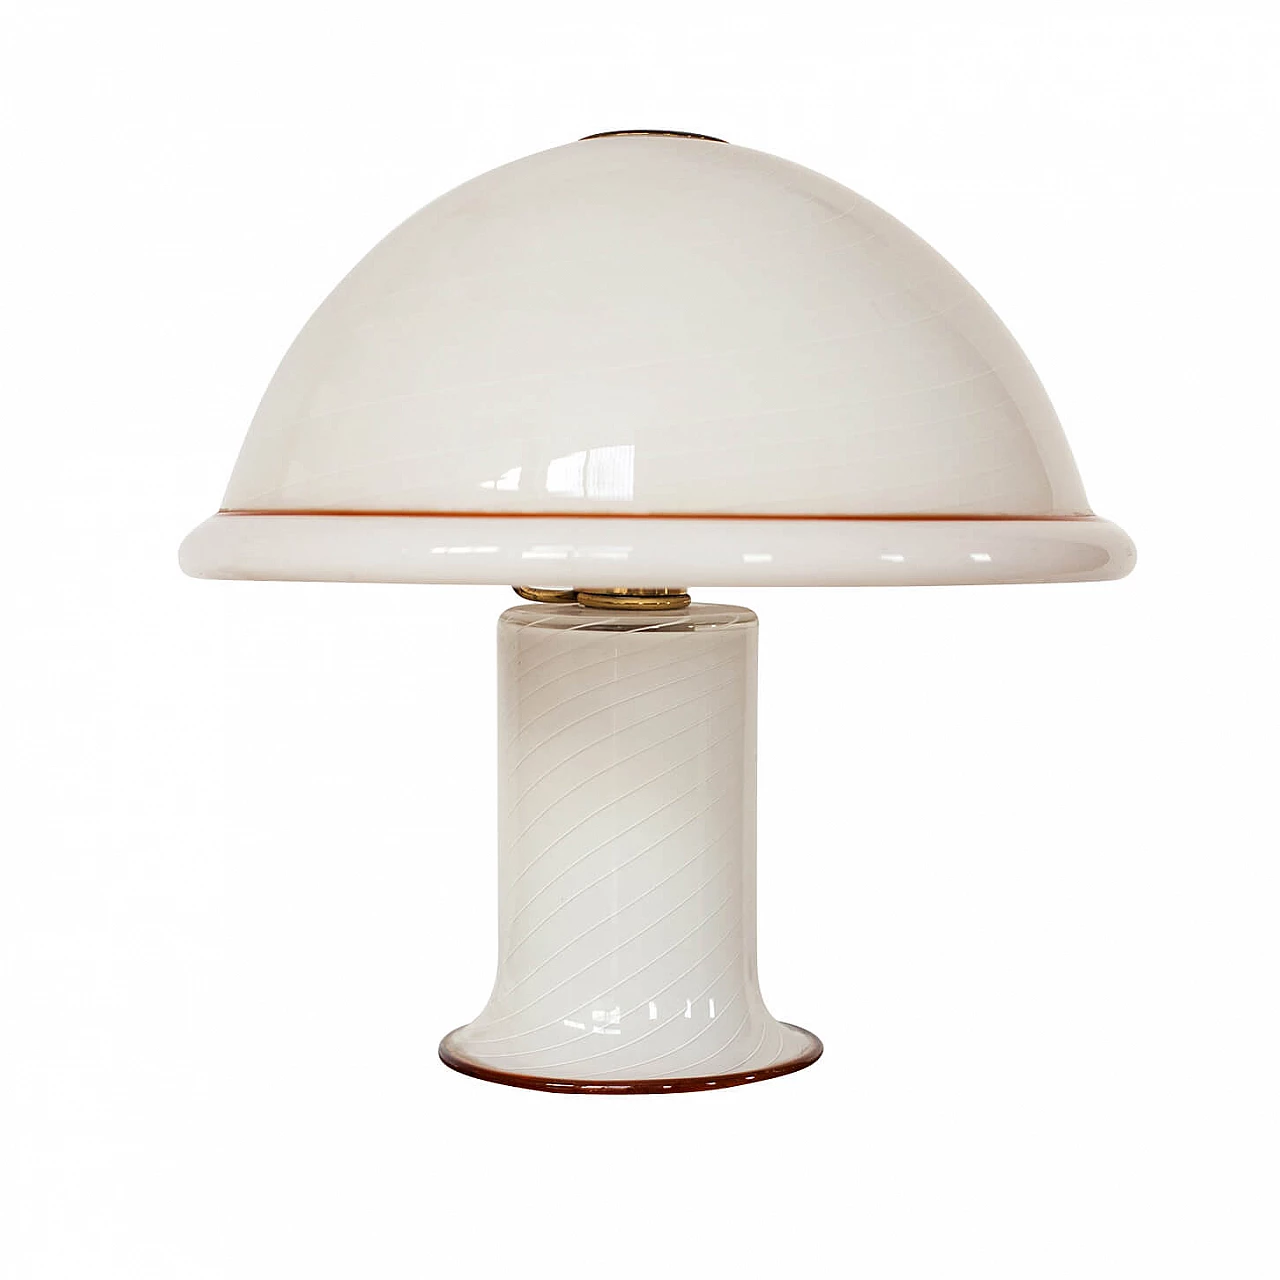 Murano glass table lamp by Lino Tagliapietra, 1970s 1228565